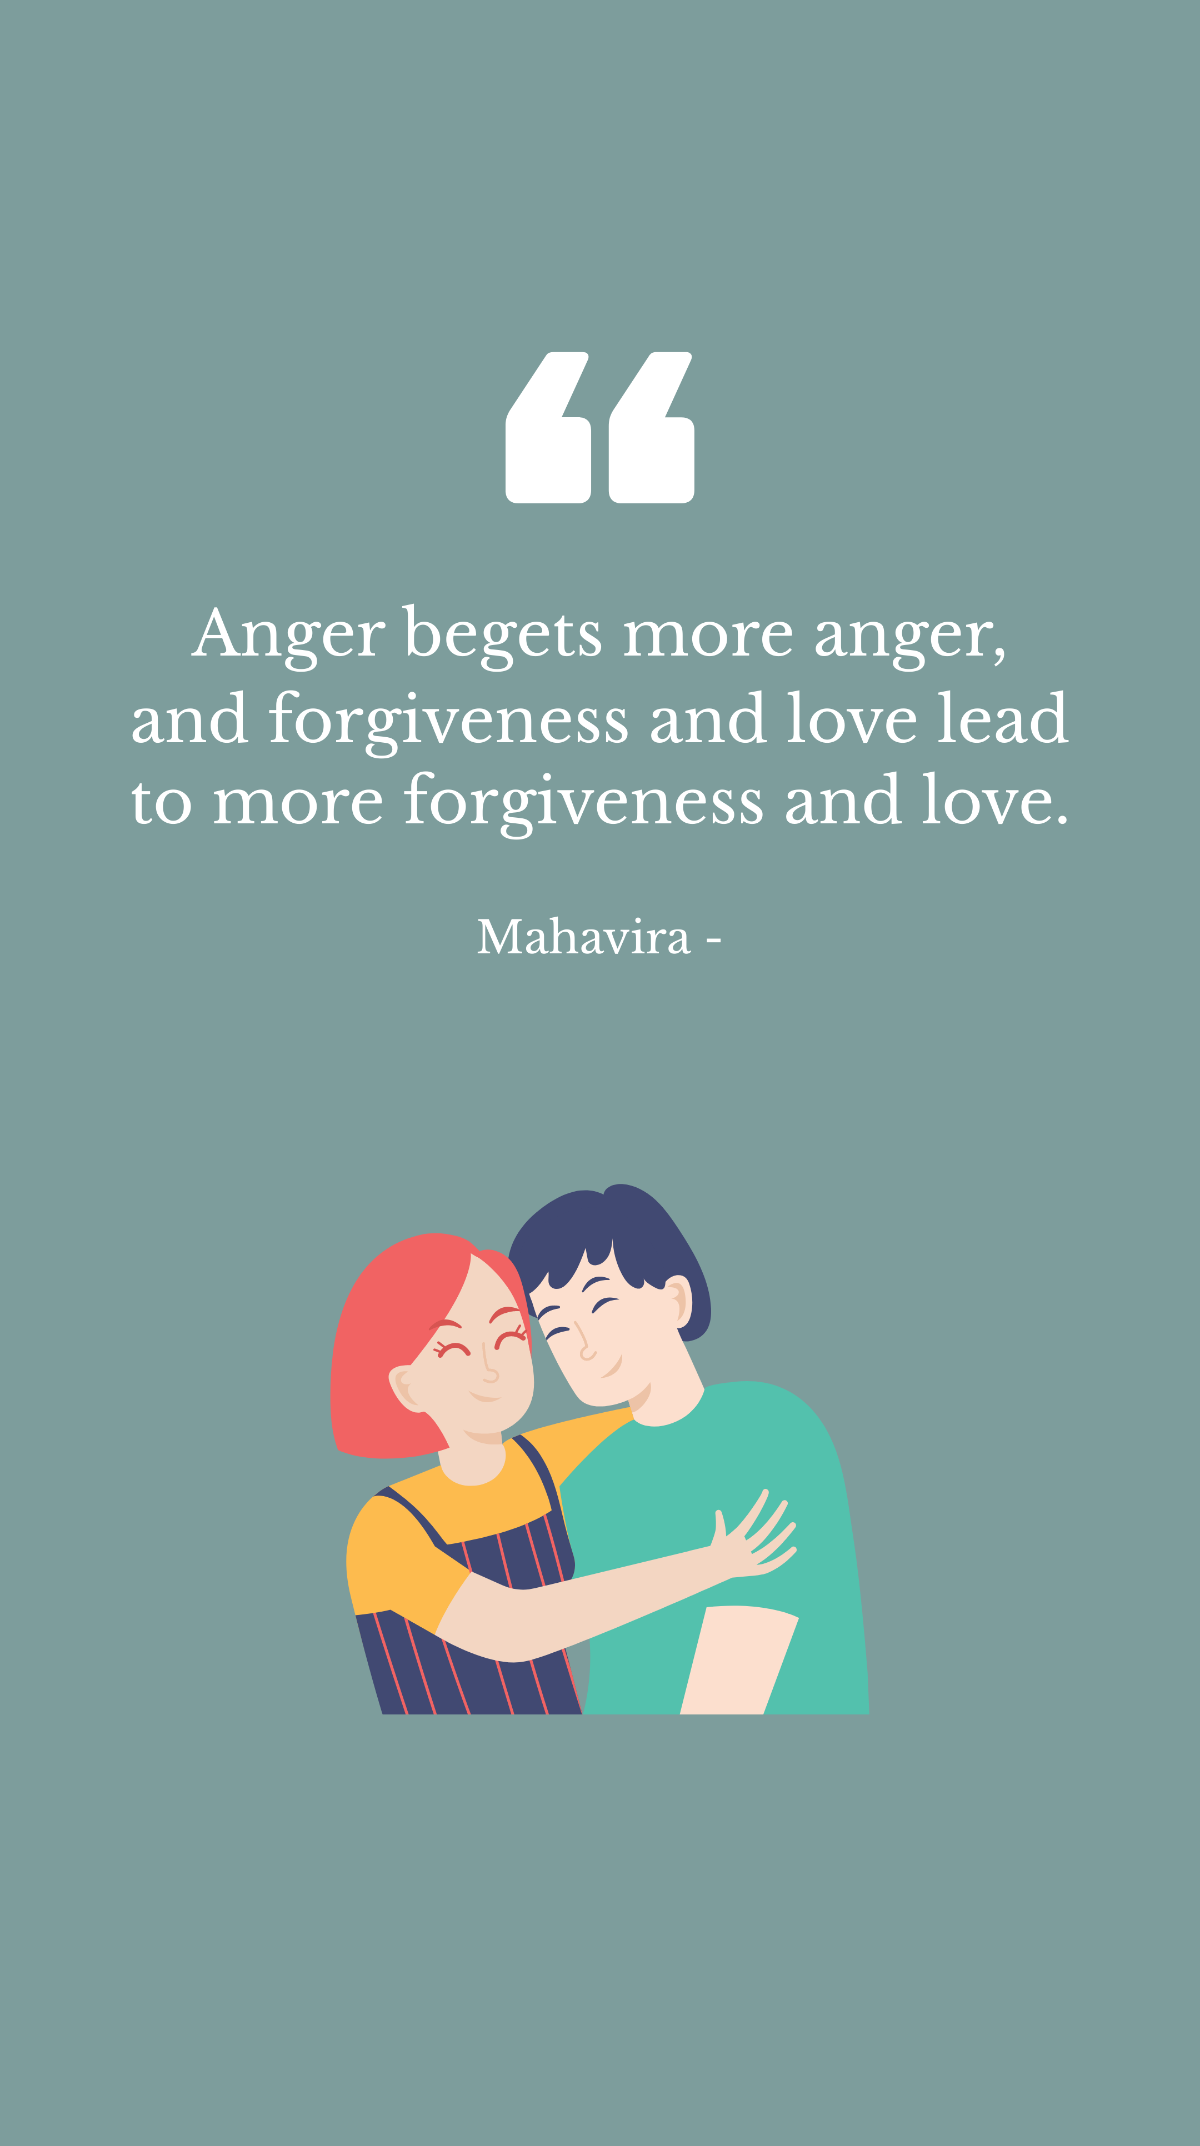 Mahavira - Anger begets more anger, and forgiveness and love lead to more forgiveness and love. Template